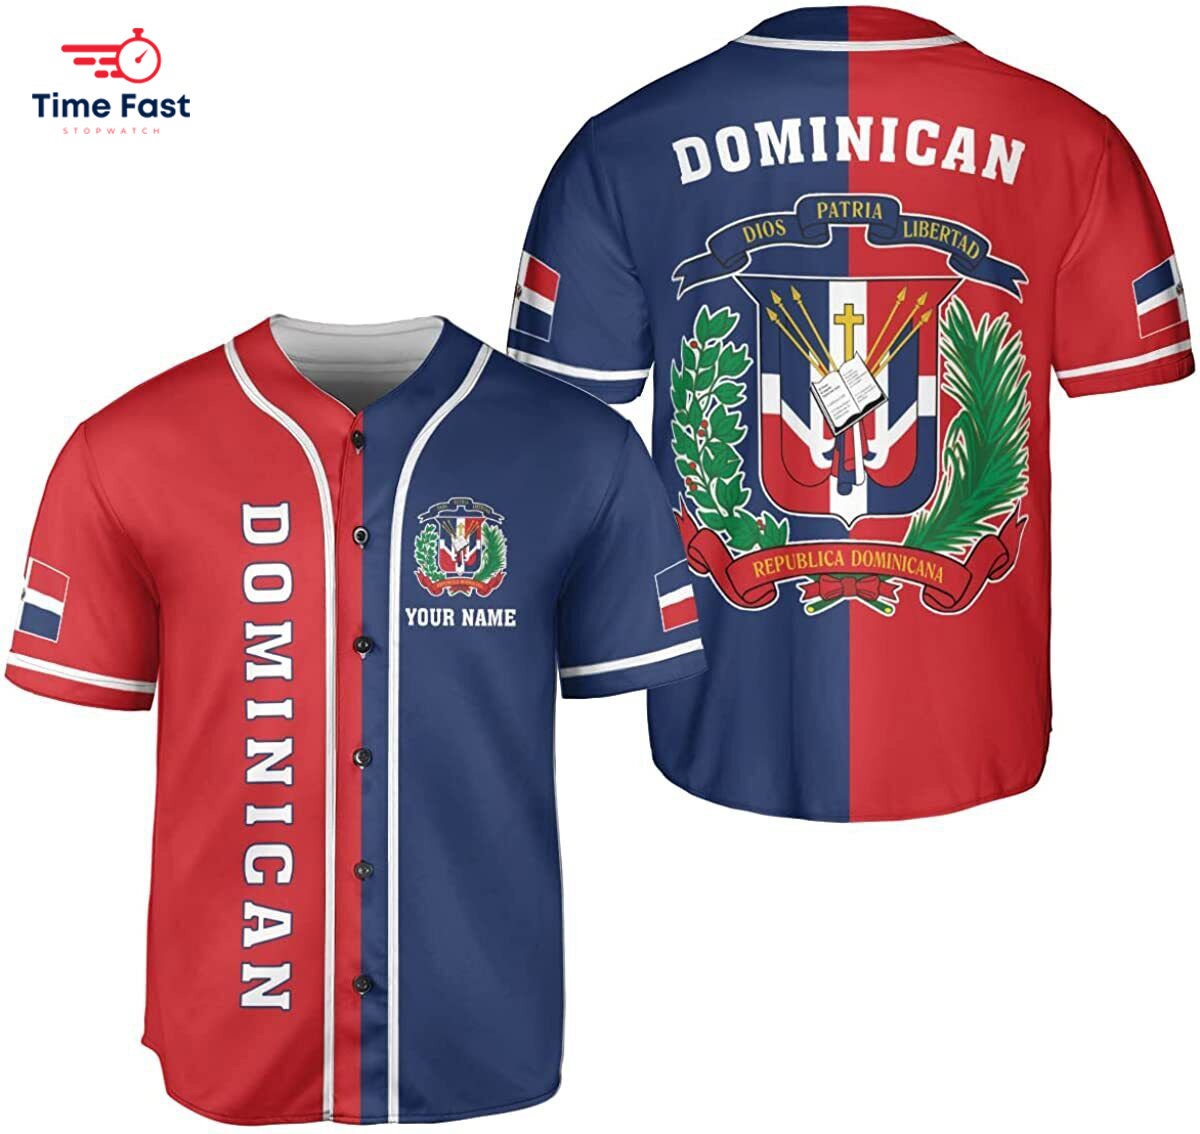 Albert Pujols Dominican Republic National Team Jersey – Best Sports Jerseys